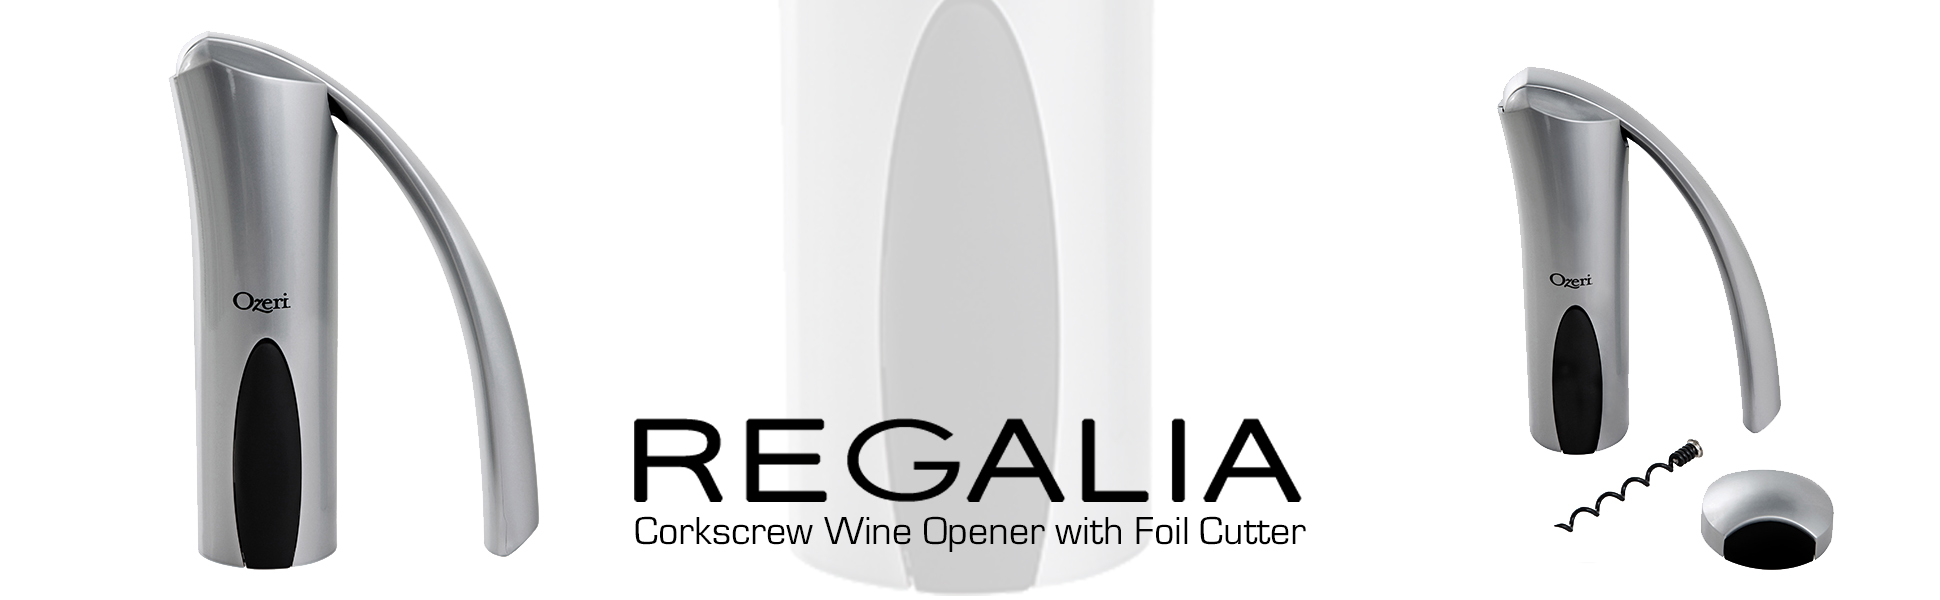 Ozeri REGALIA Corkscrew Wine opener